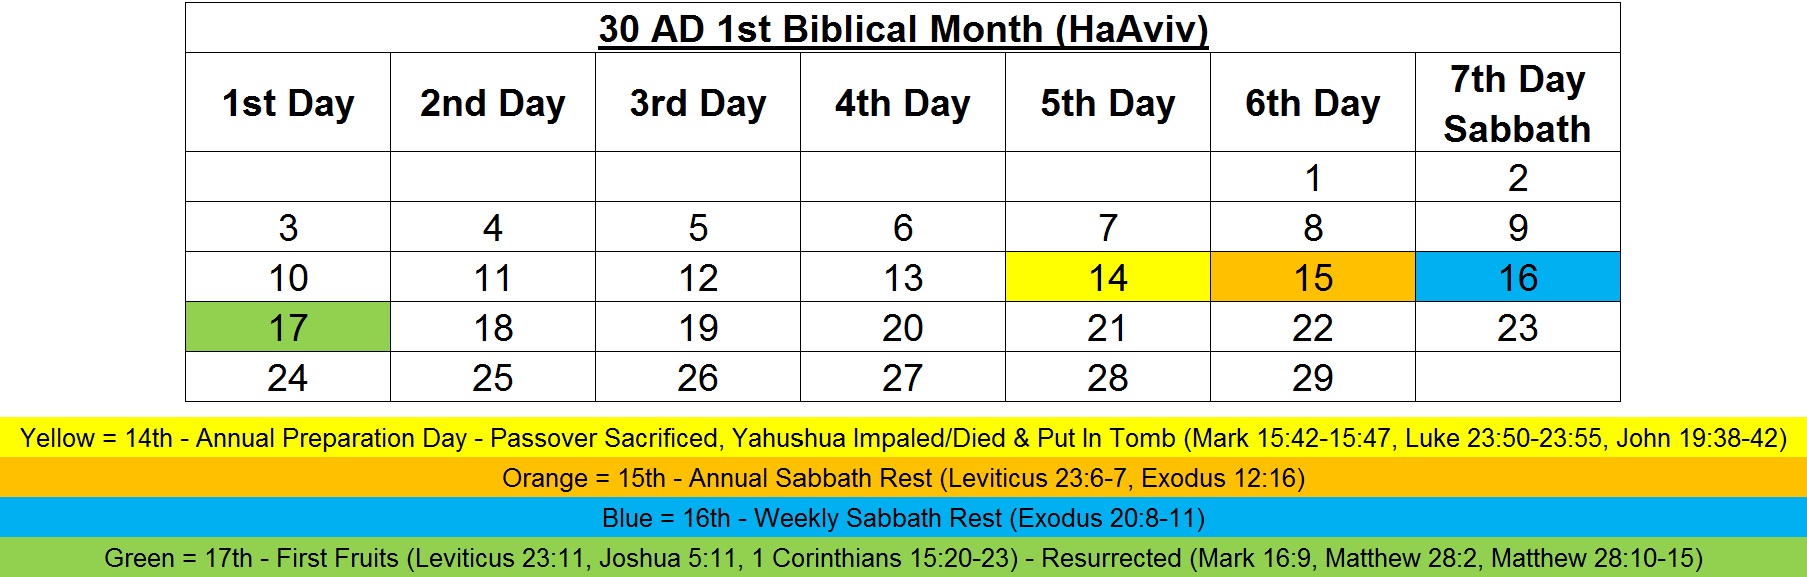 30 AD Biblical Calendar